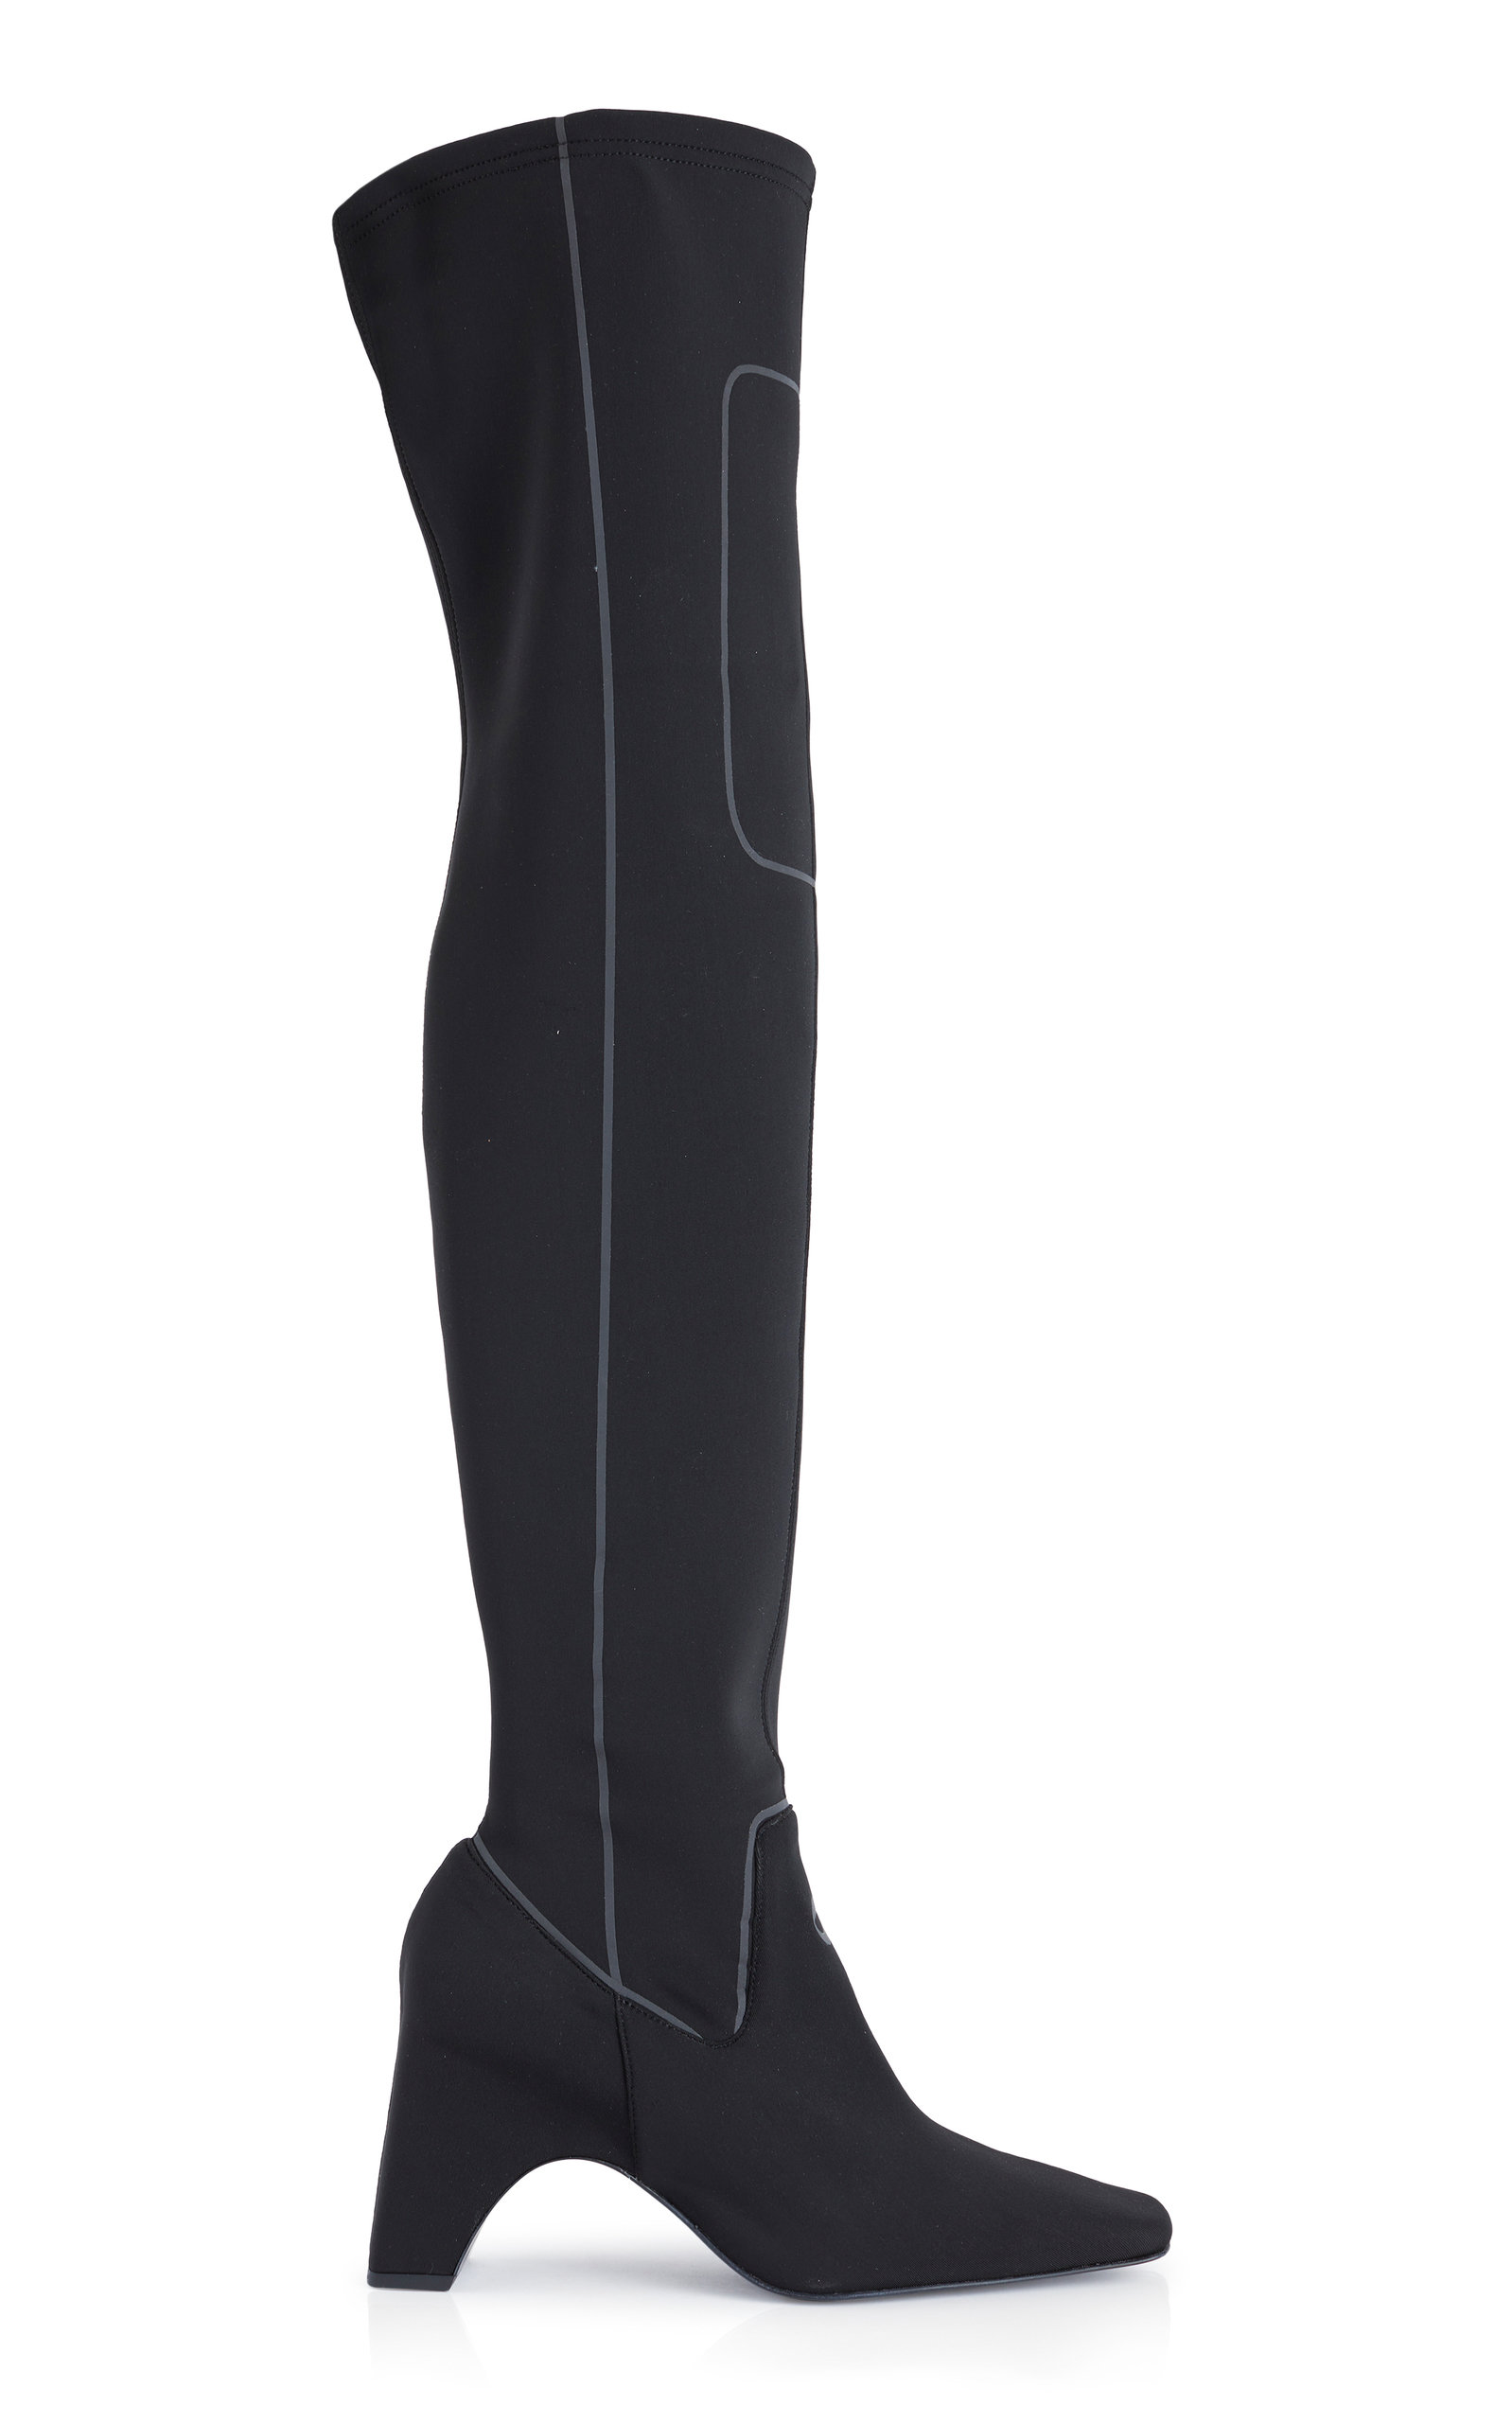 Coperni - Women's Stretch Synthetic Leather Boots - Black - Only At Moda Operandi